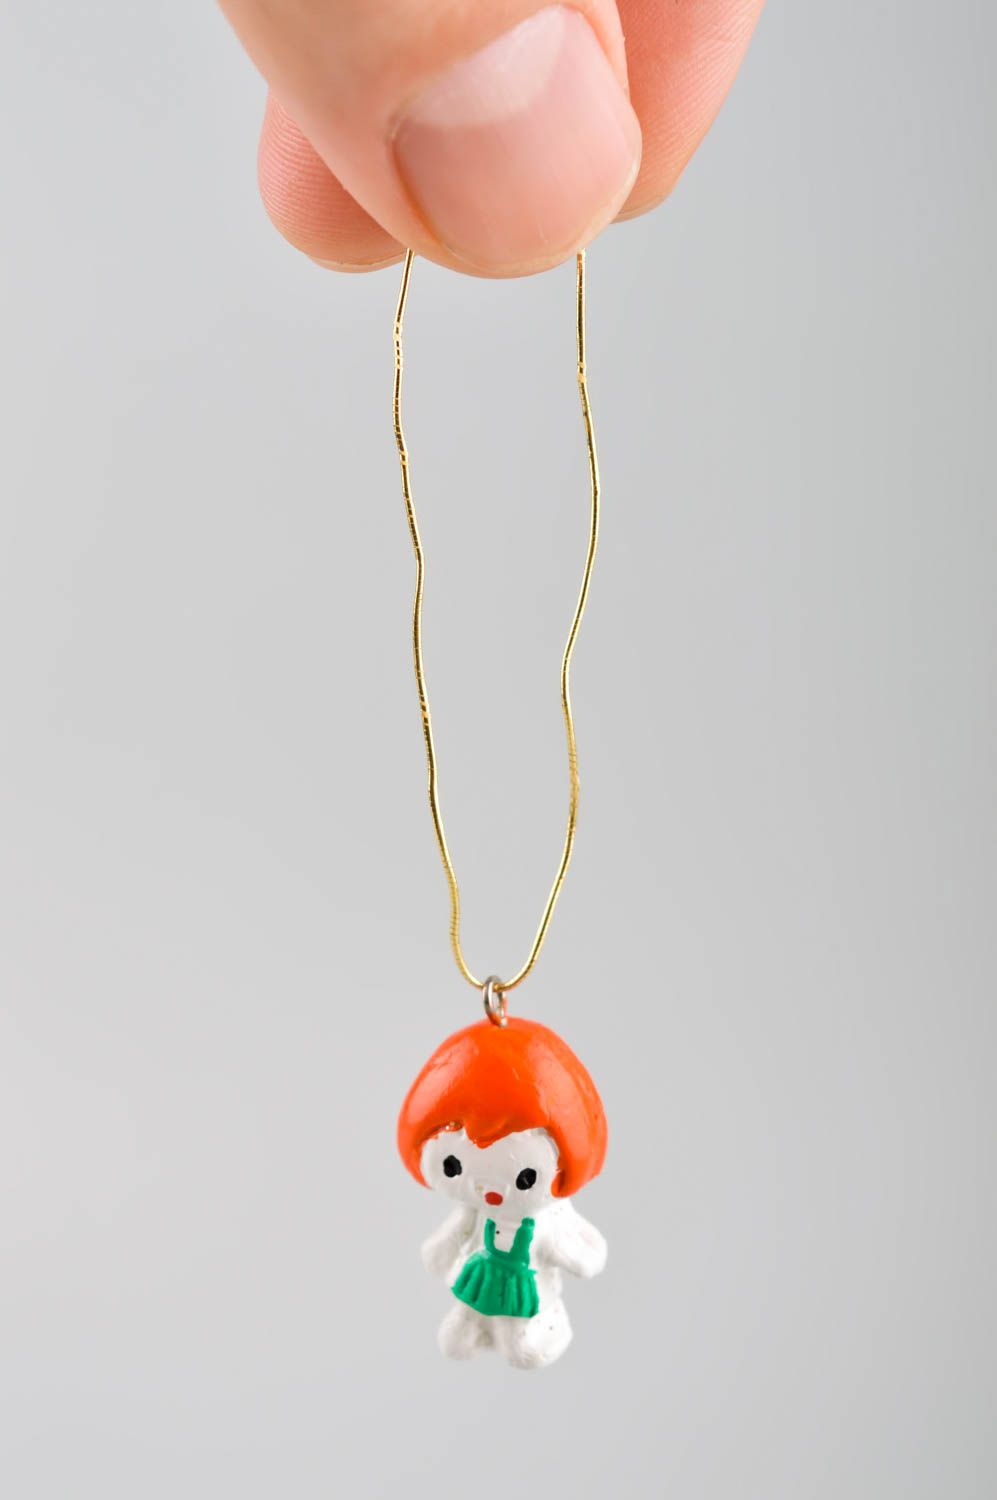 Handmade designer interior toy stylish Christmas decor unusual wall hanging photo 5